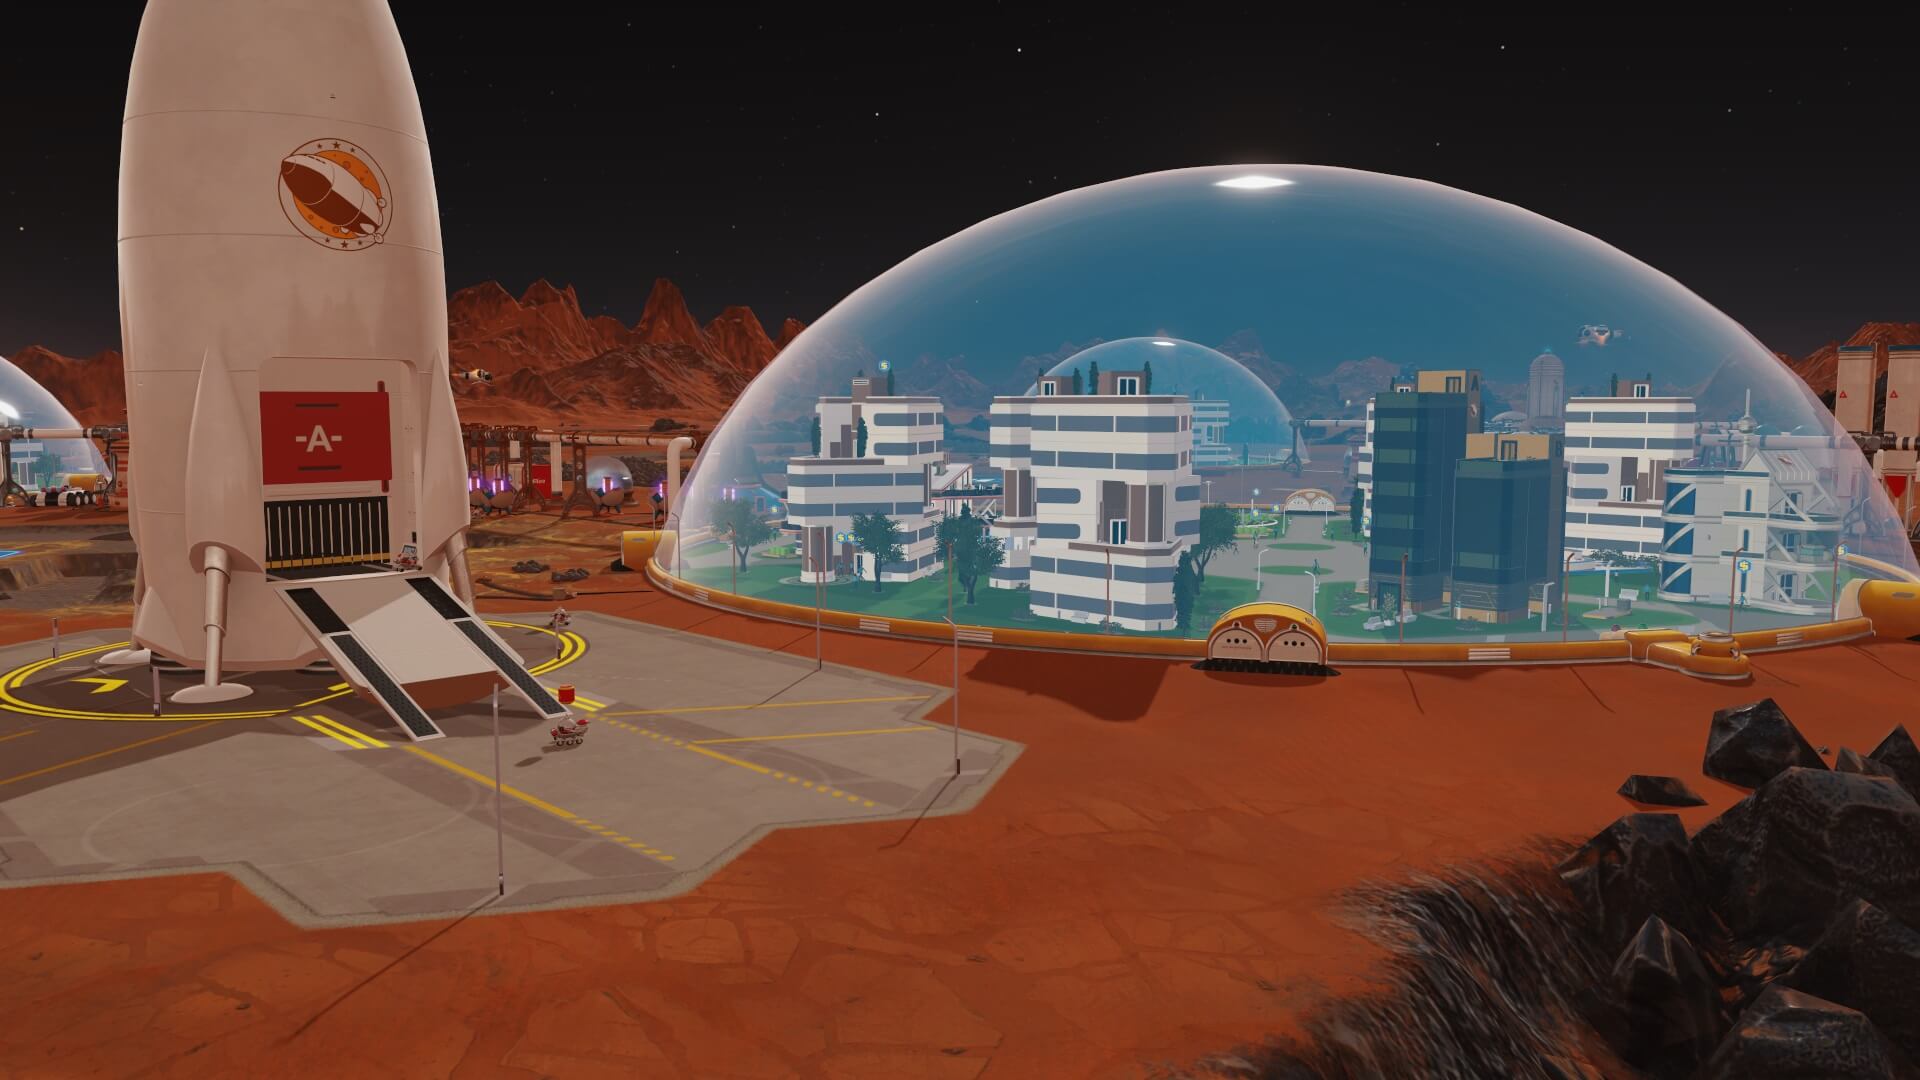 Surviving Mars 攻略ブログ 初心者の為の安定した火星開発方法 Game Play360